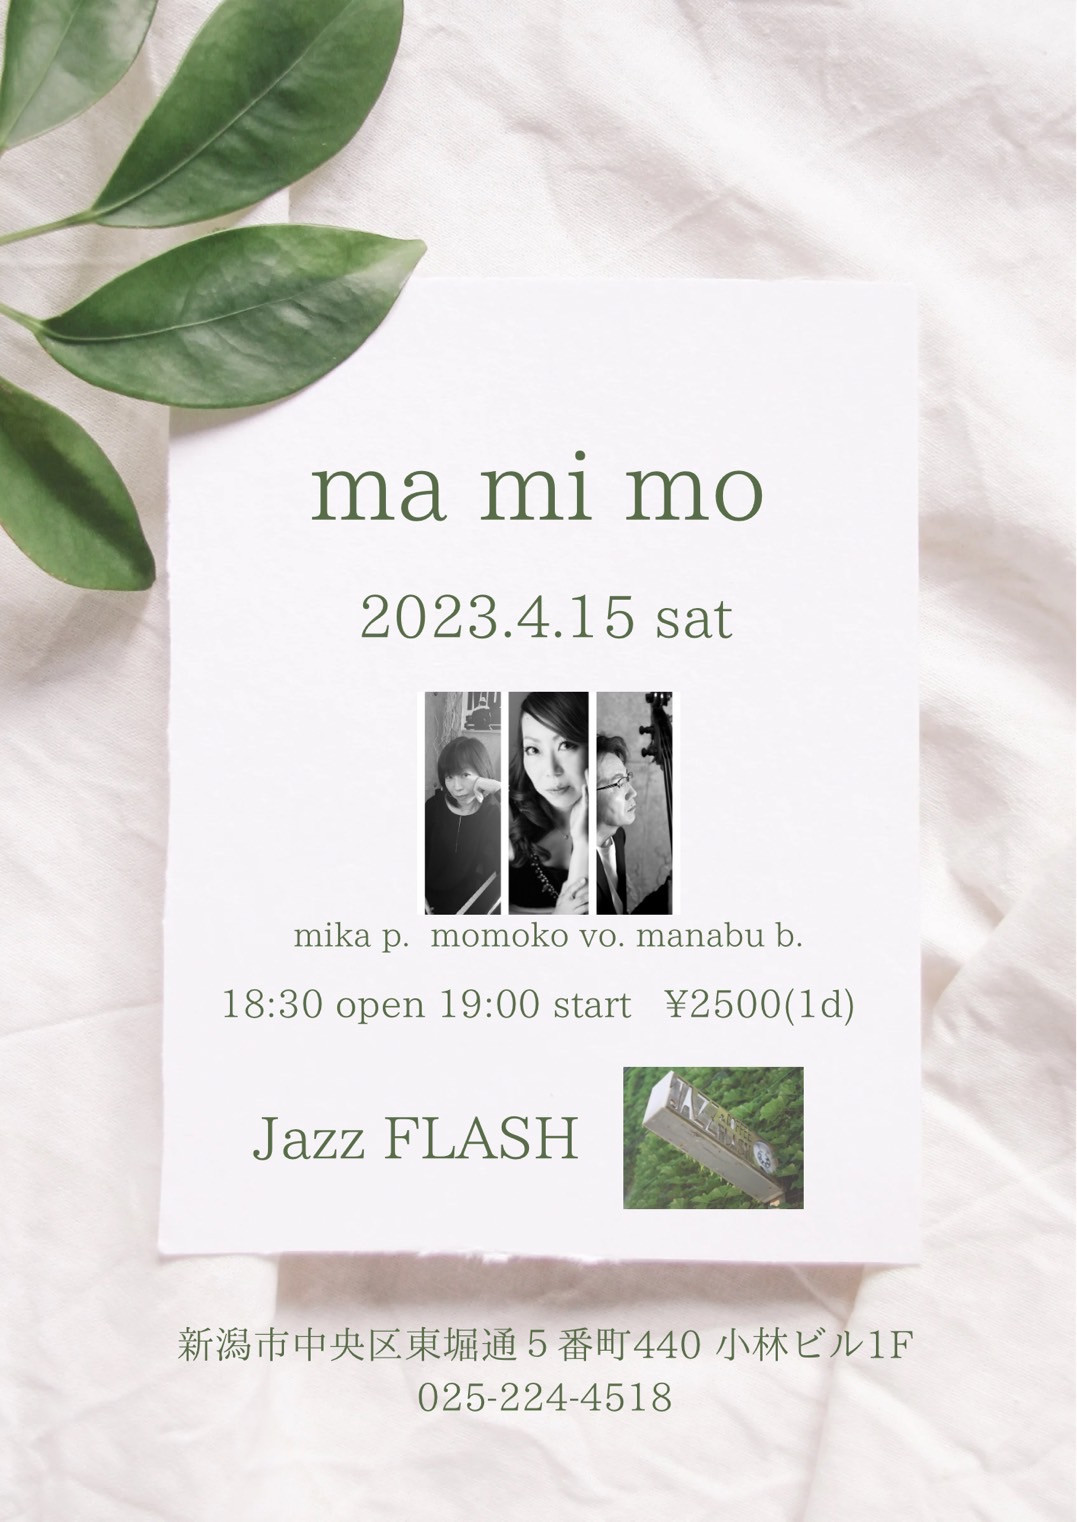 4/15(土) ma mi mo@Jazz Flash